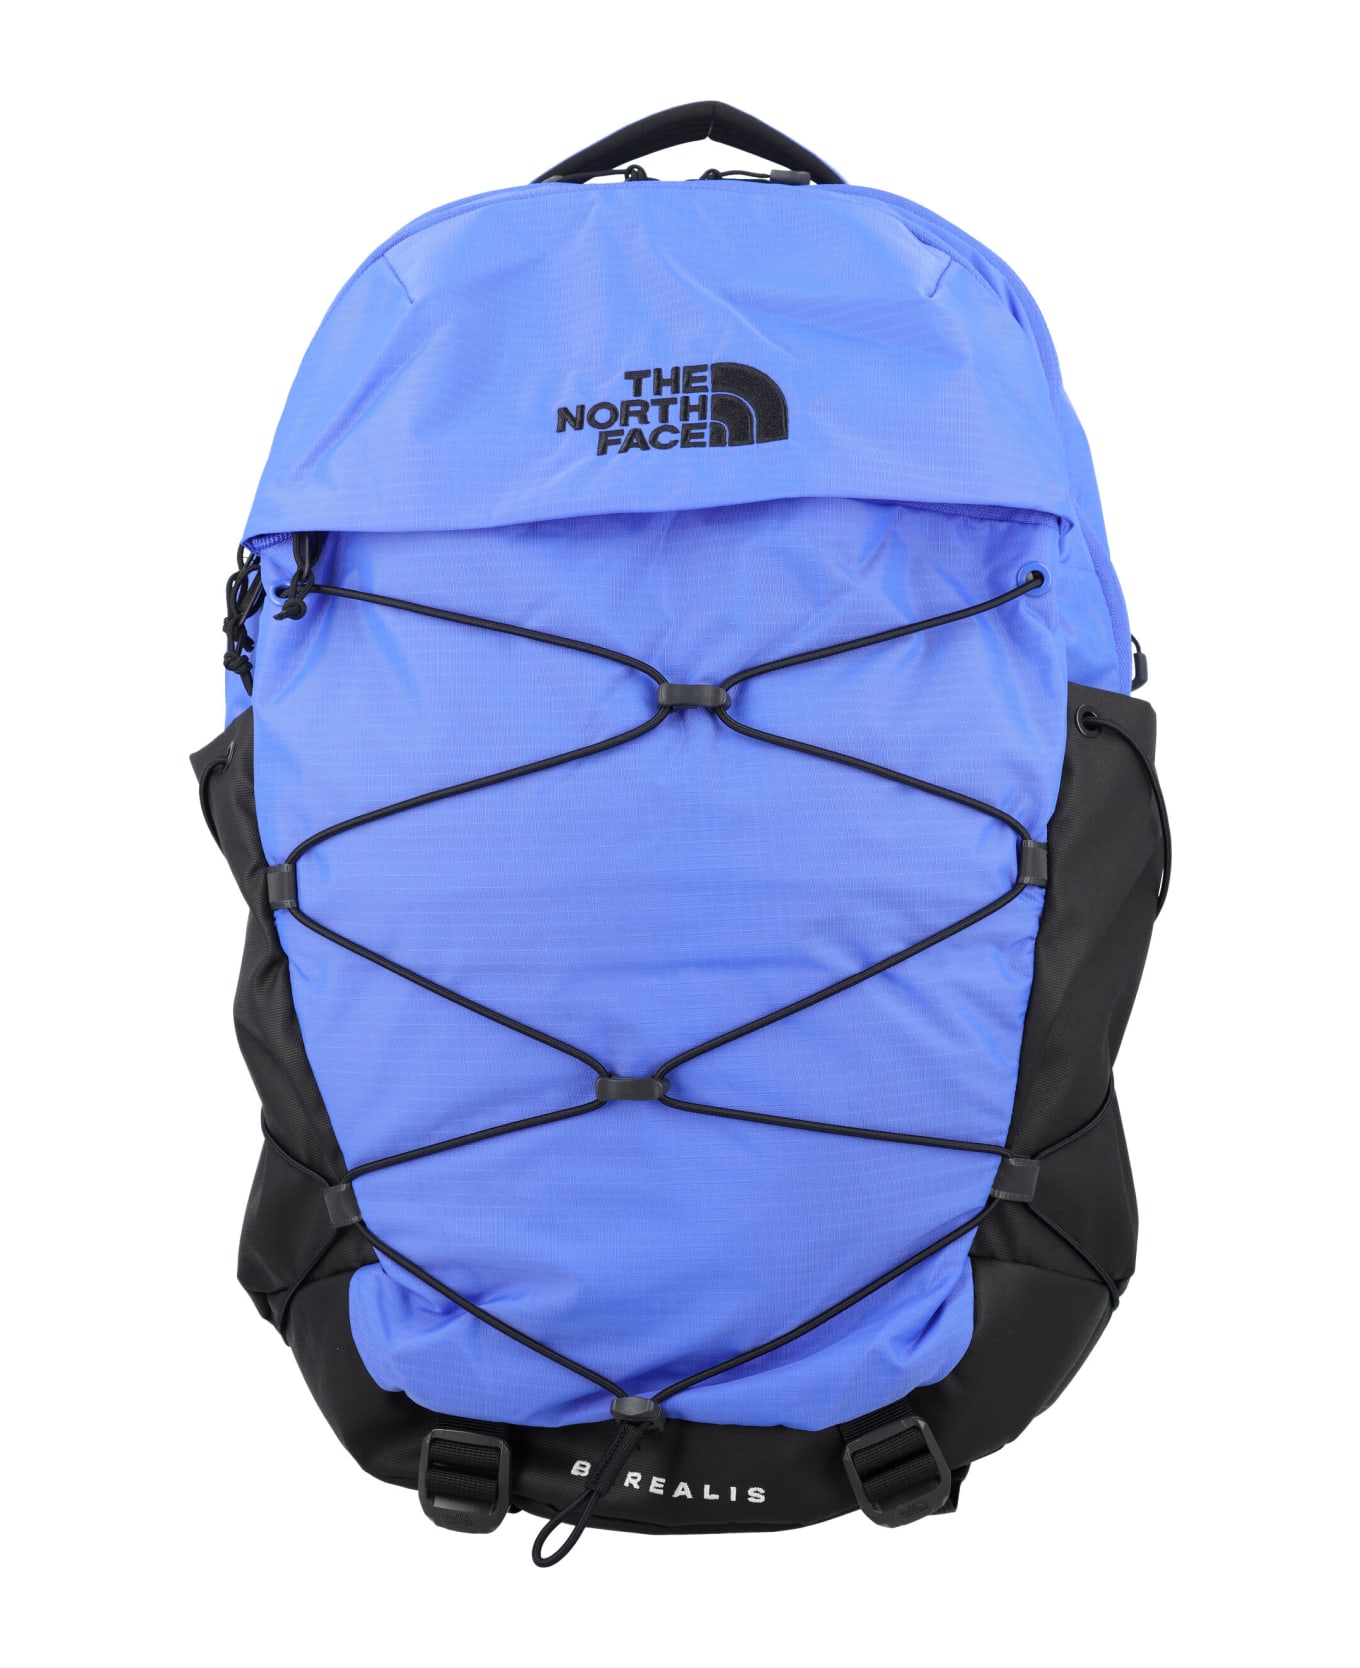 The North Face Borealis Backpack - BLUE ROYAL